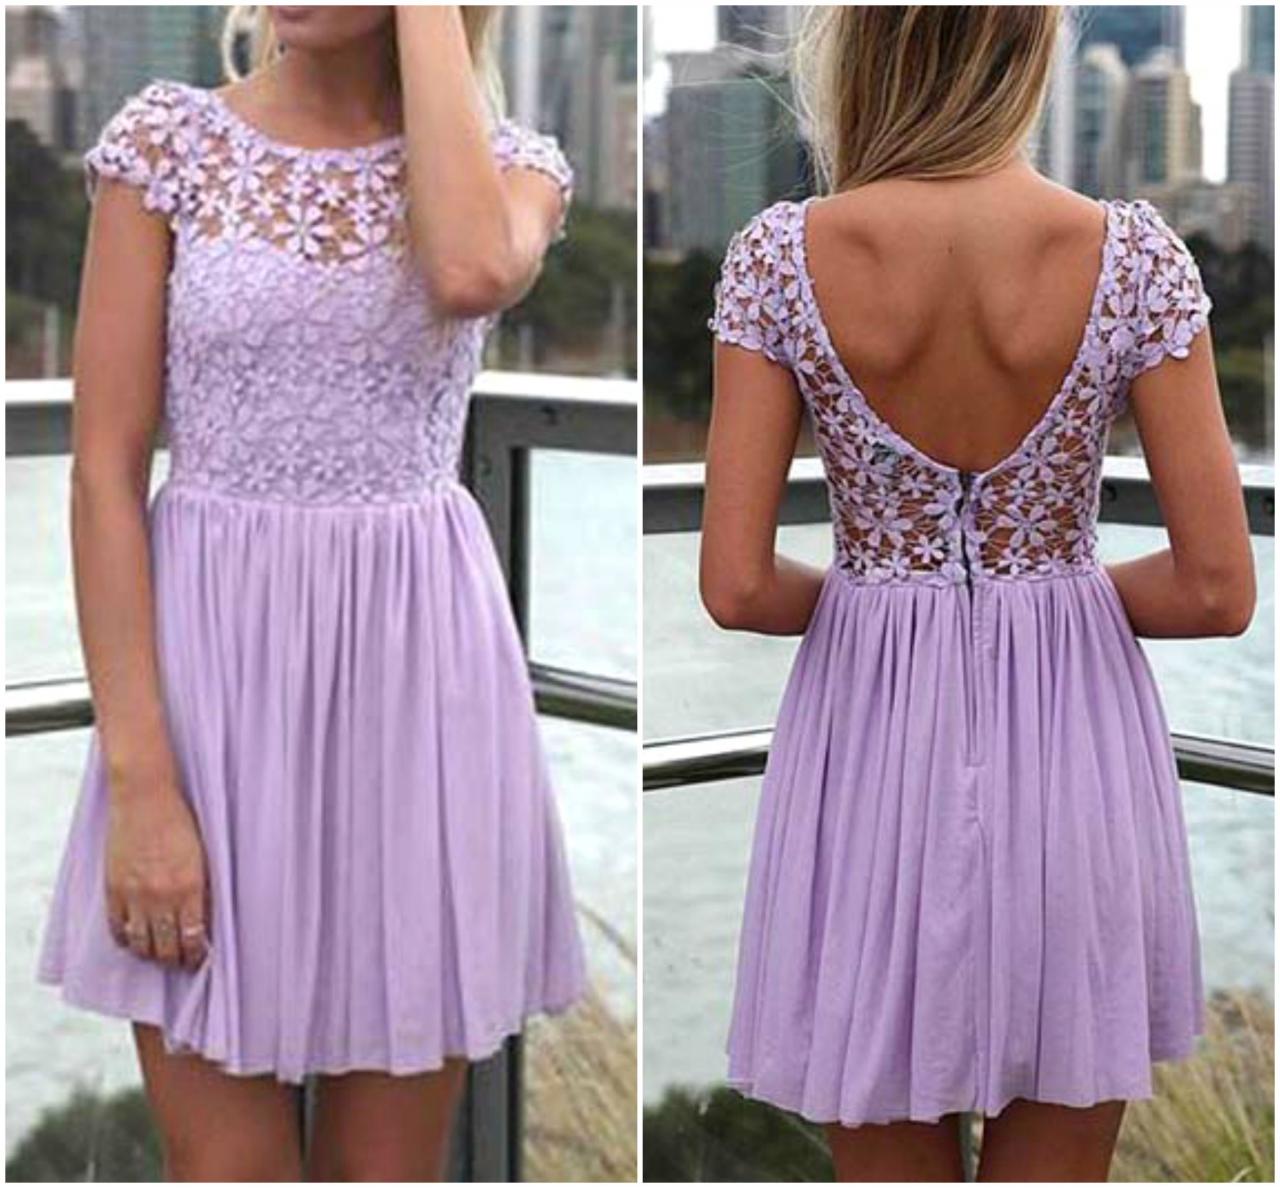 Cute Purple Lace And Floral Design Chiffon Dress